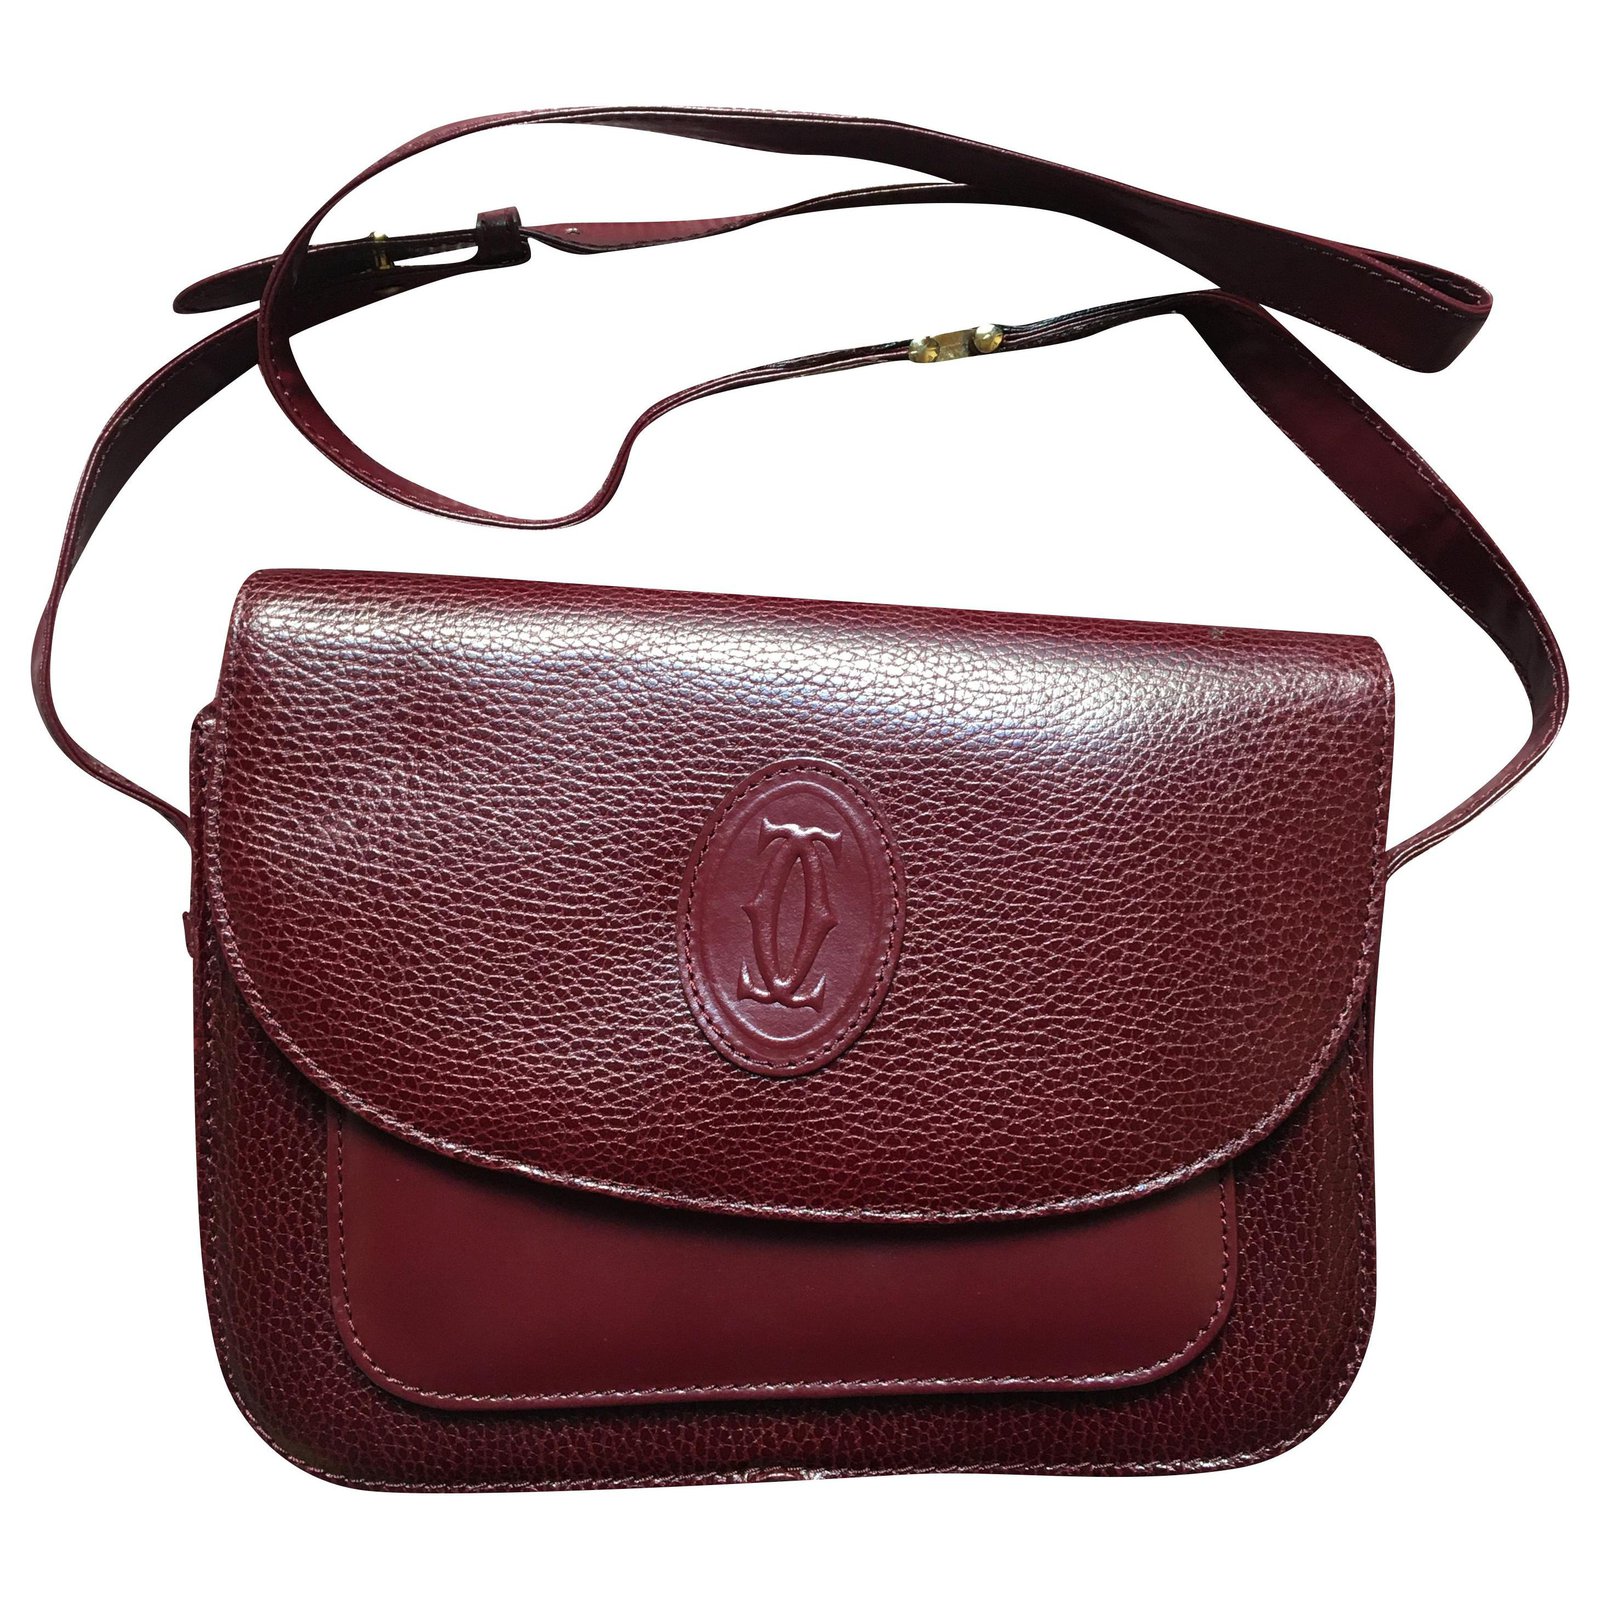 Cartier cartier bag Handbags Leather 